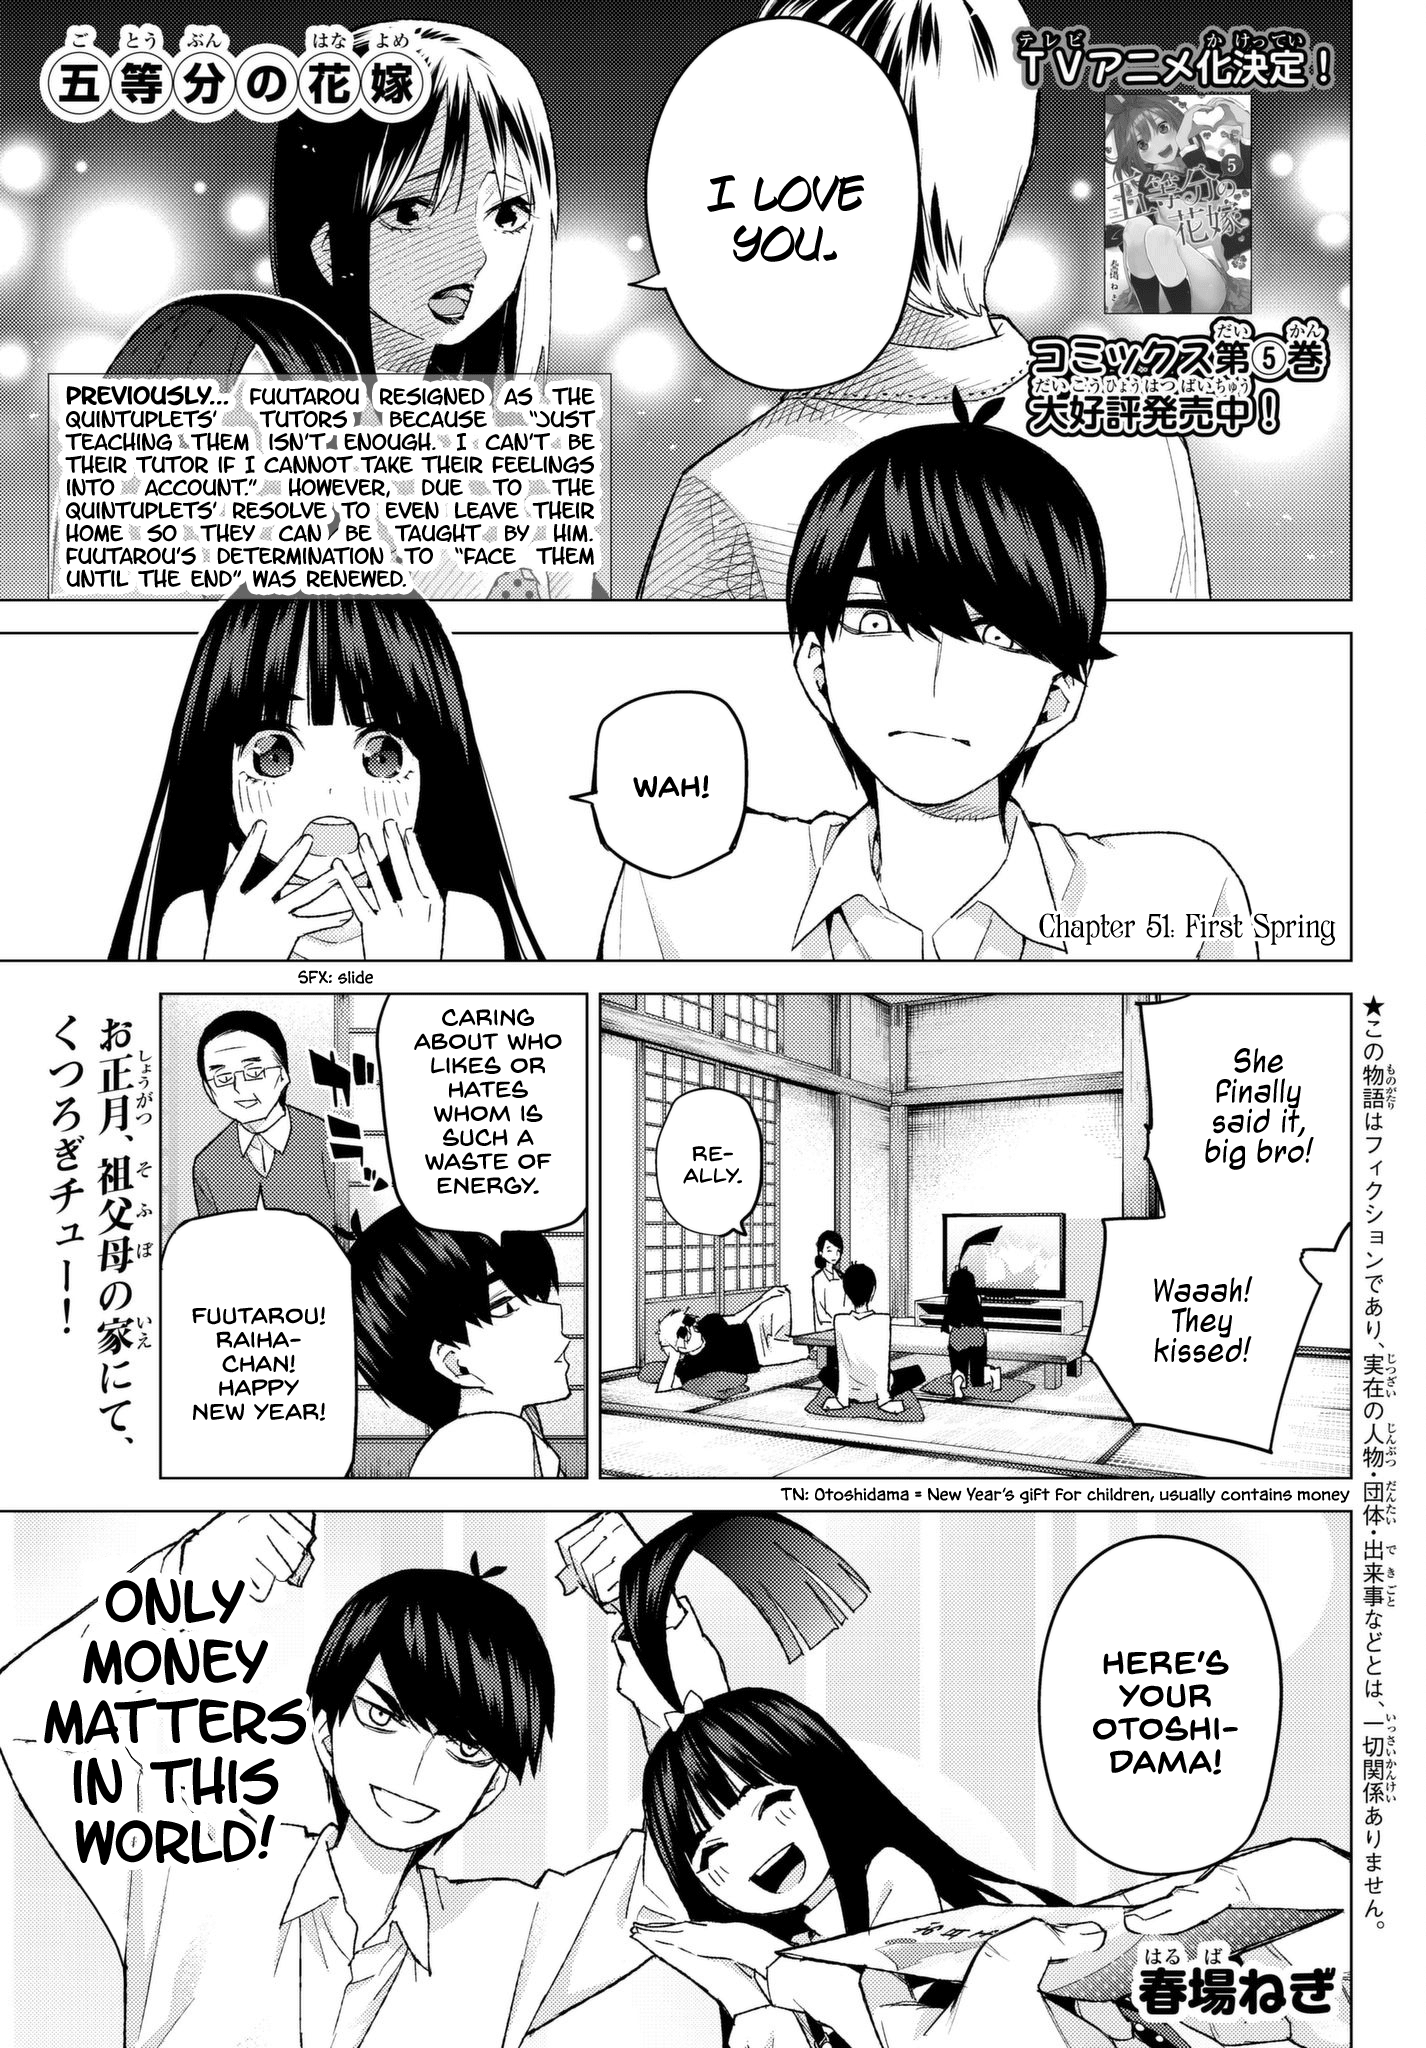 5Toubun no Hanayome Manga Chapter 122.5